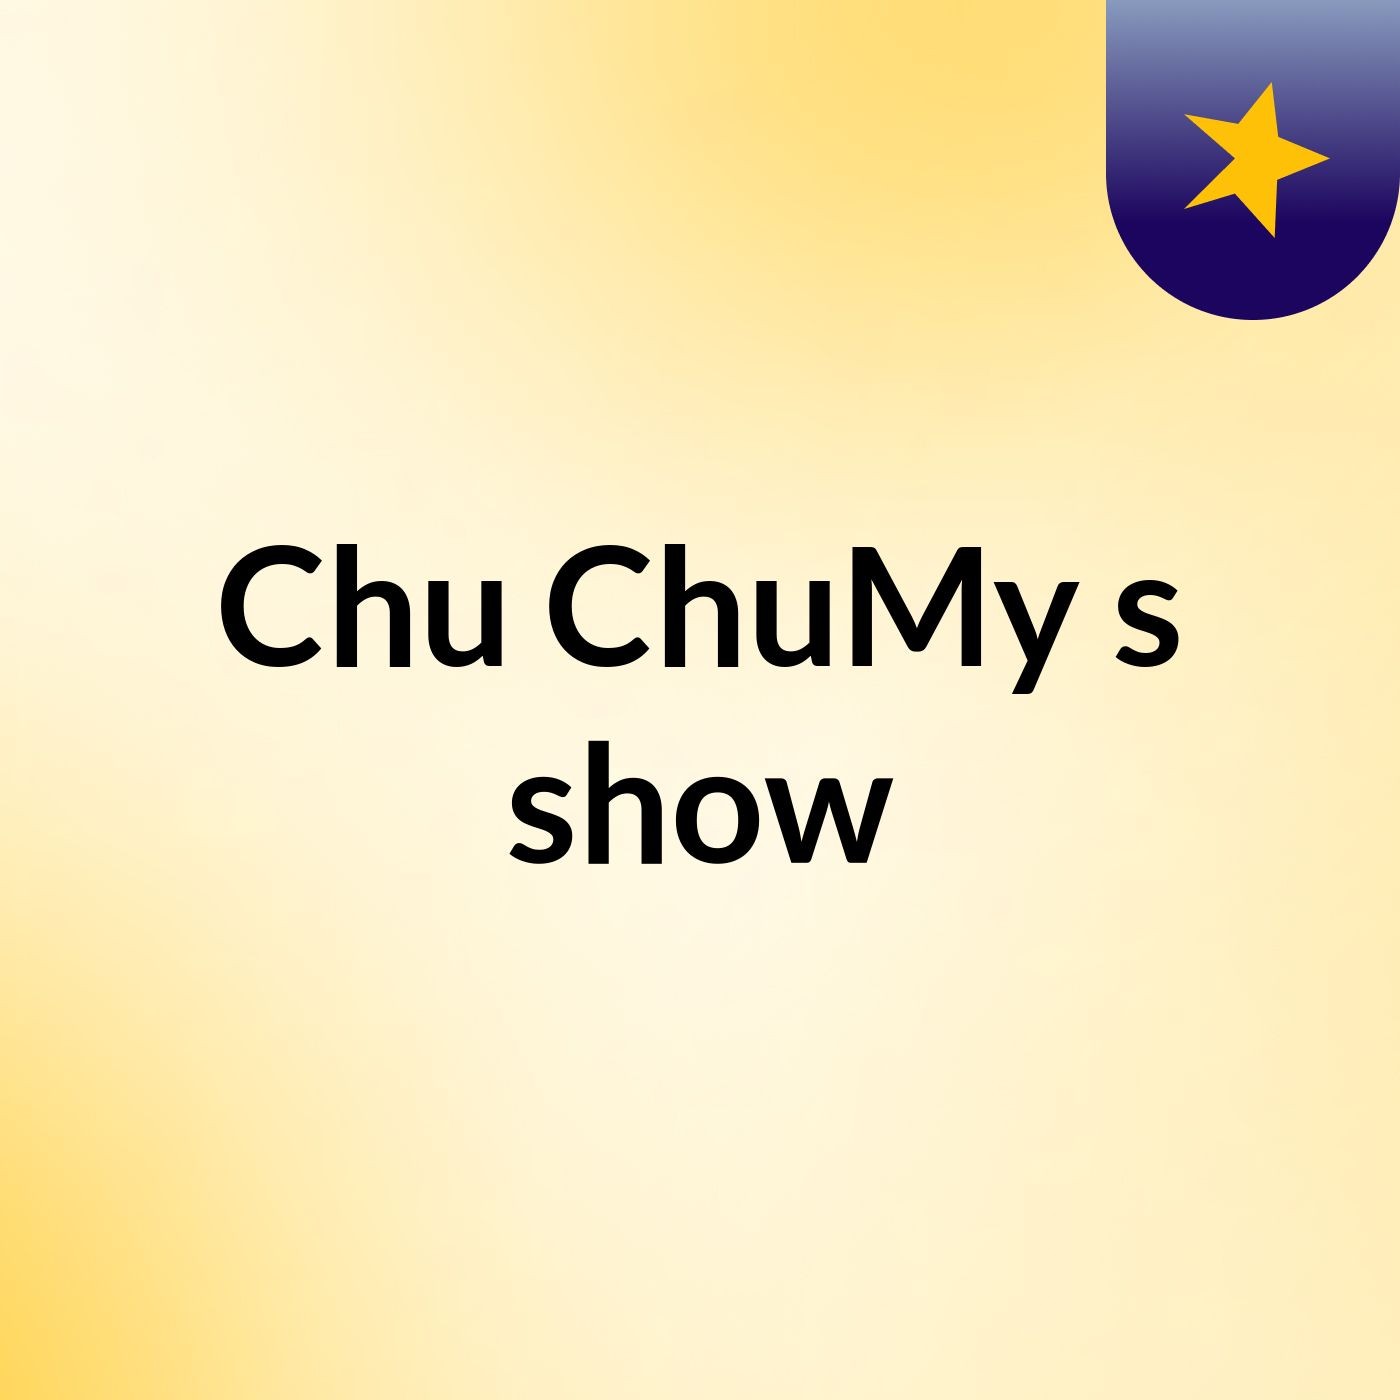 Chu ChuMy's show